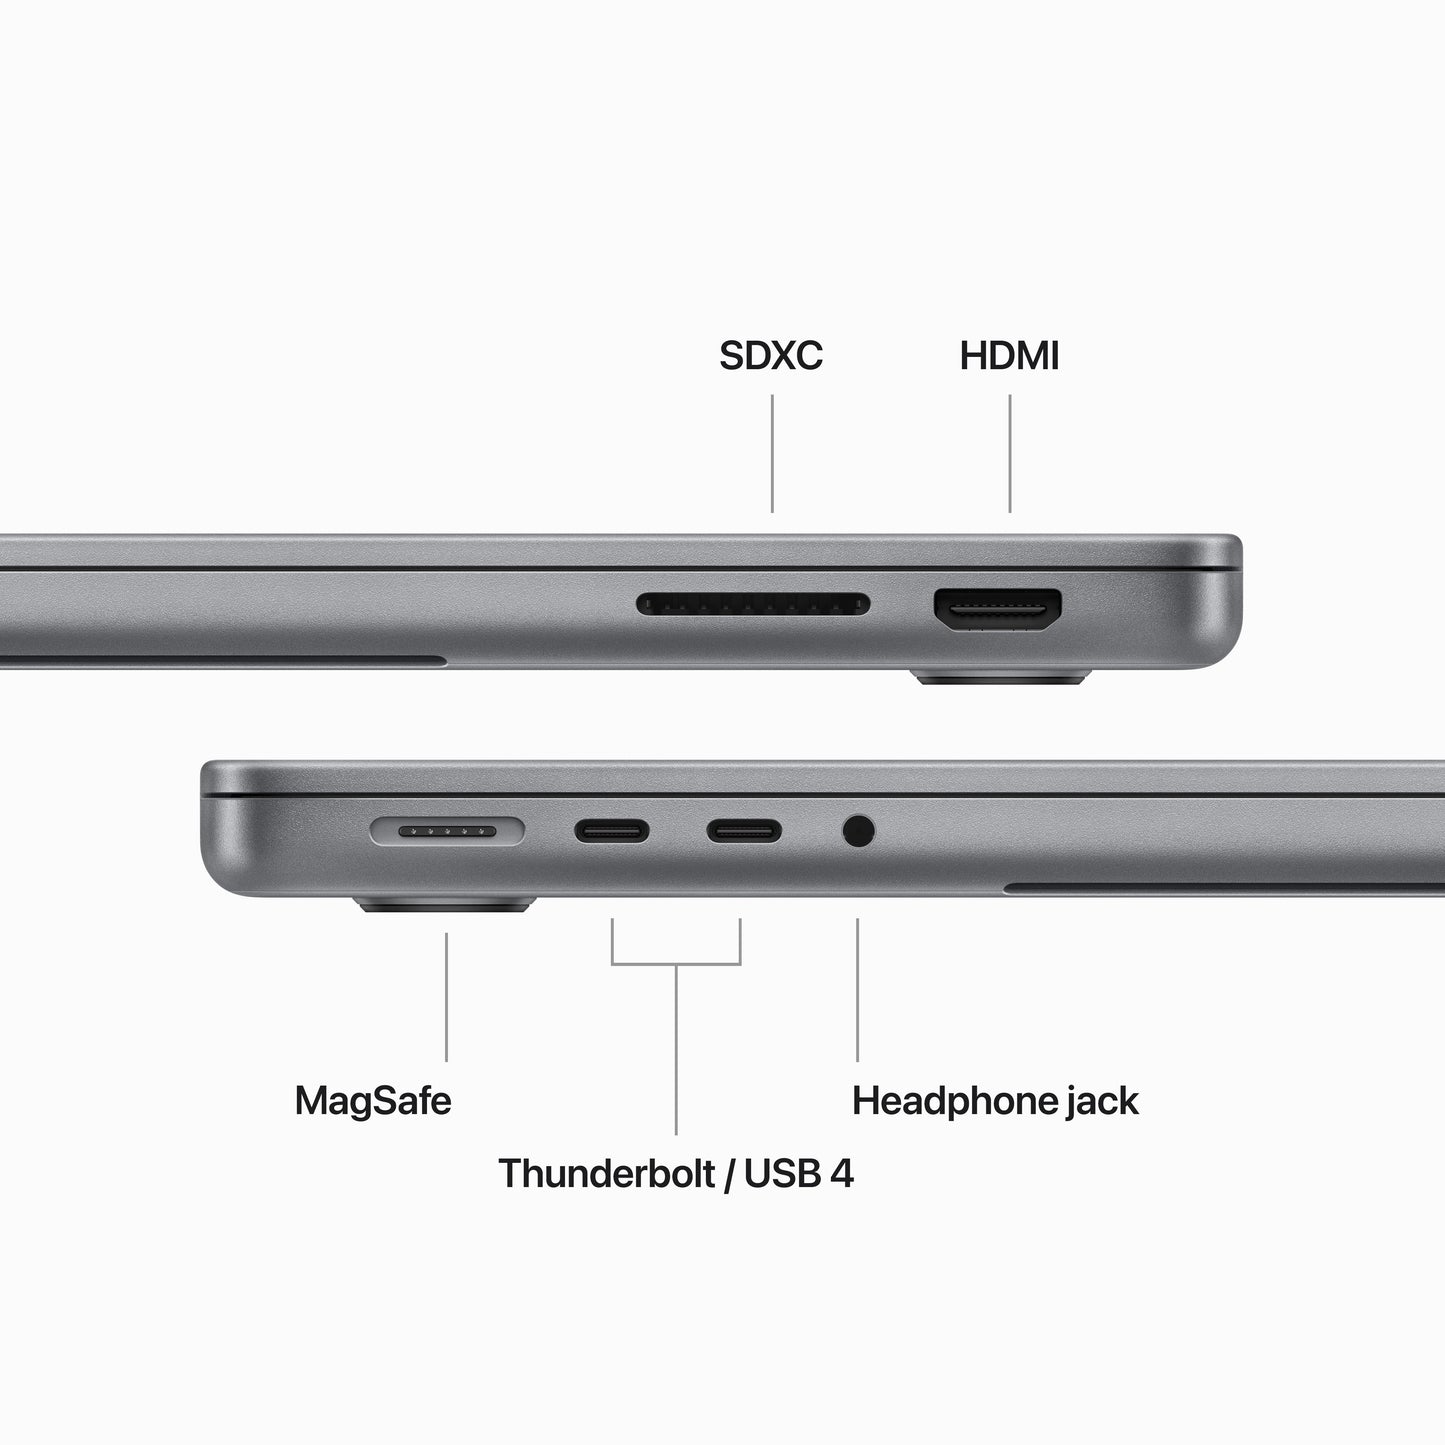 14-inch MacBook Pro - M3 - Space Gray